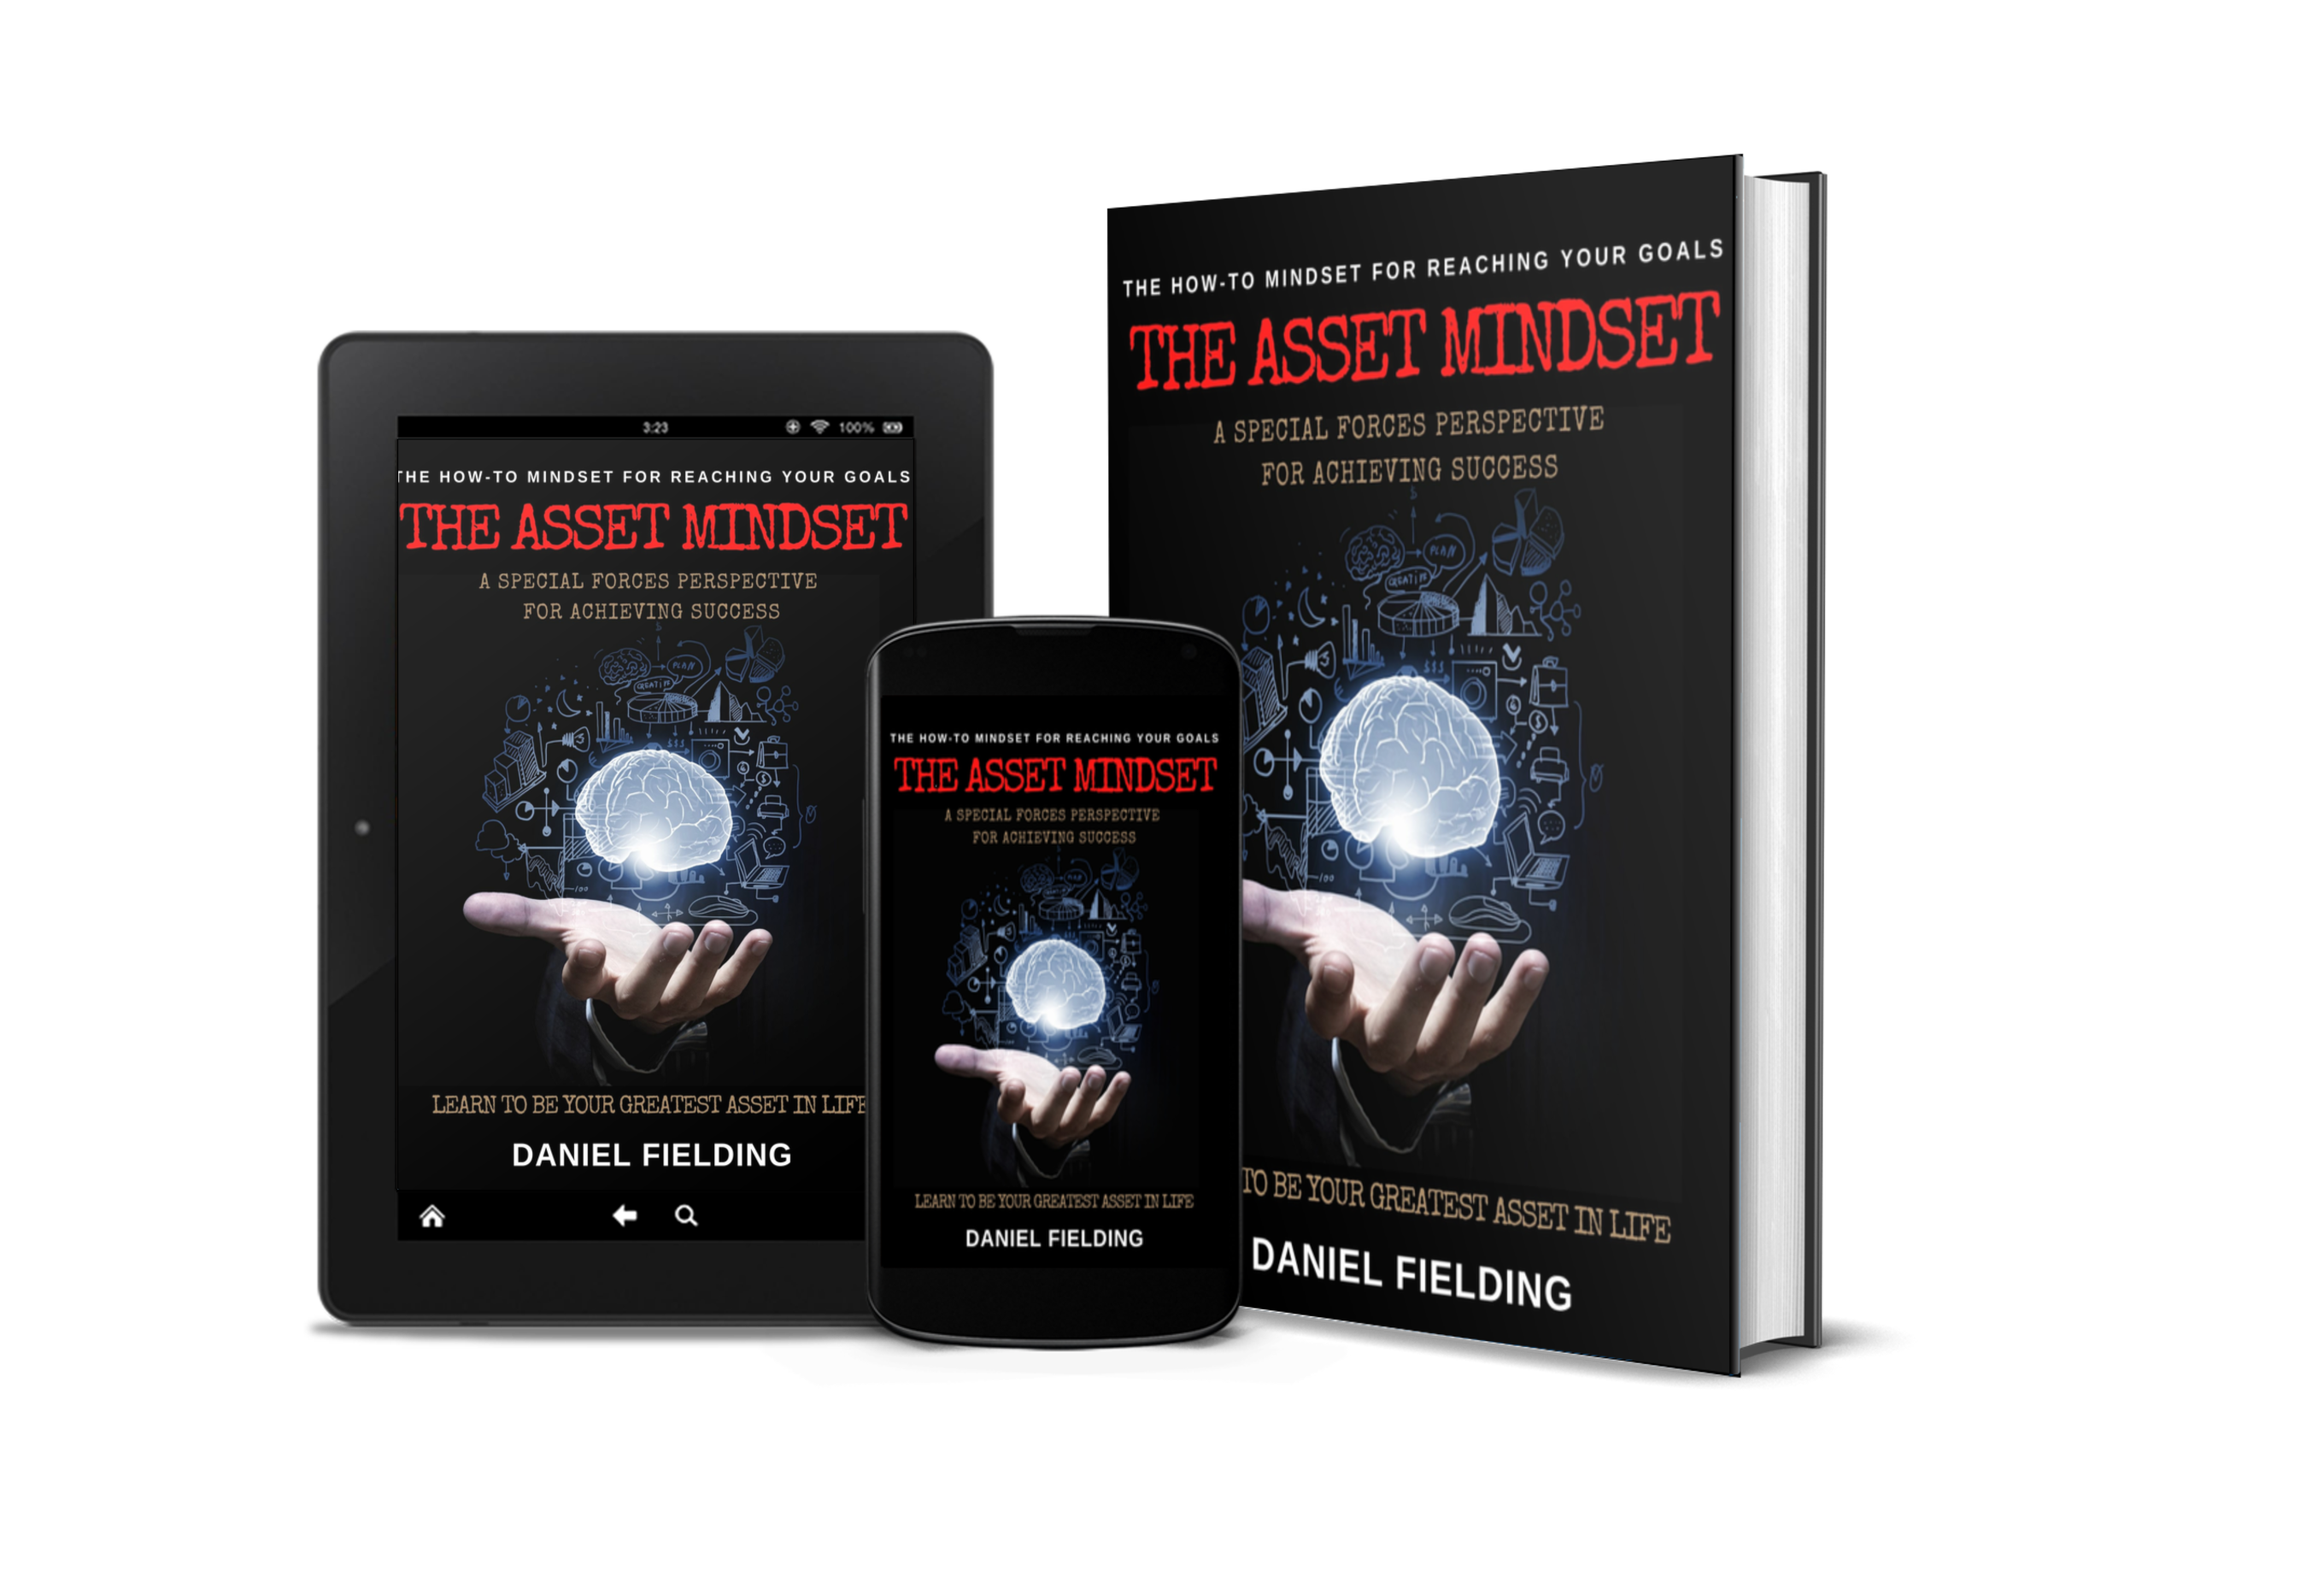 Get “The Asset Mindset” today!